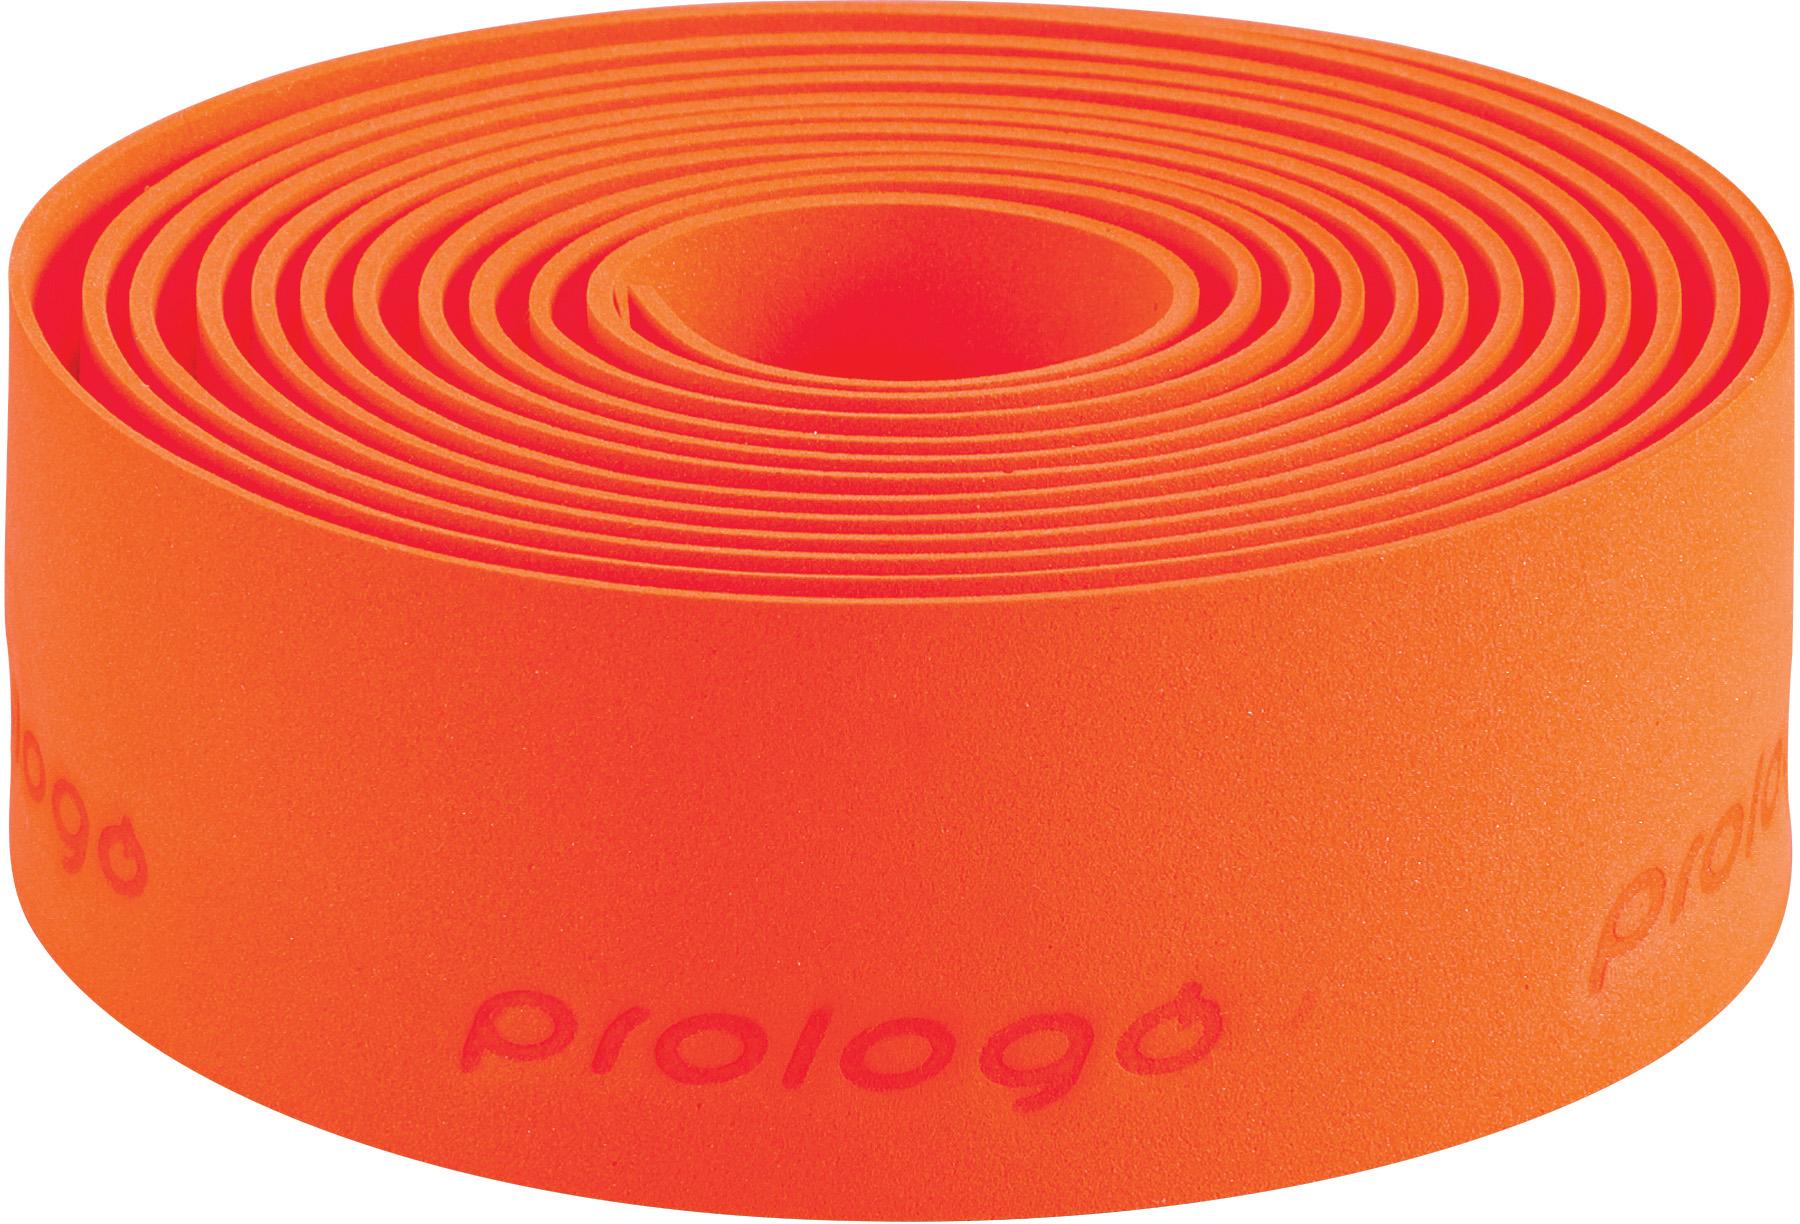 Prologo Plaintouch Handlebar Tape - Orange